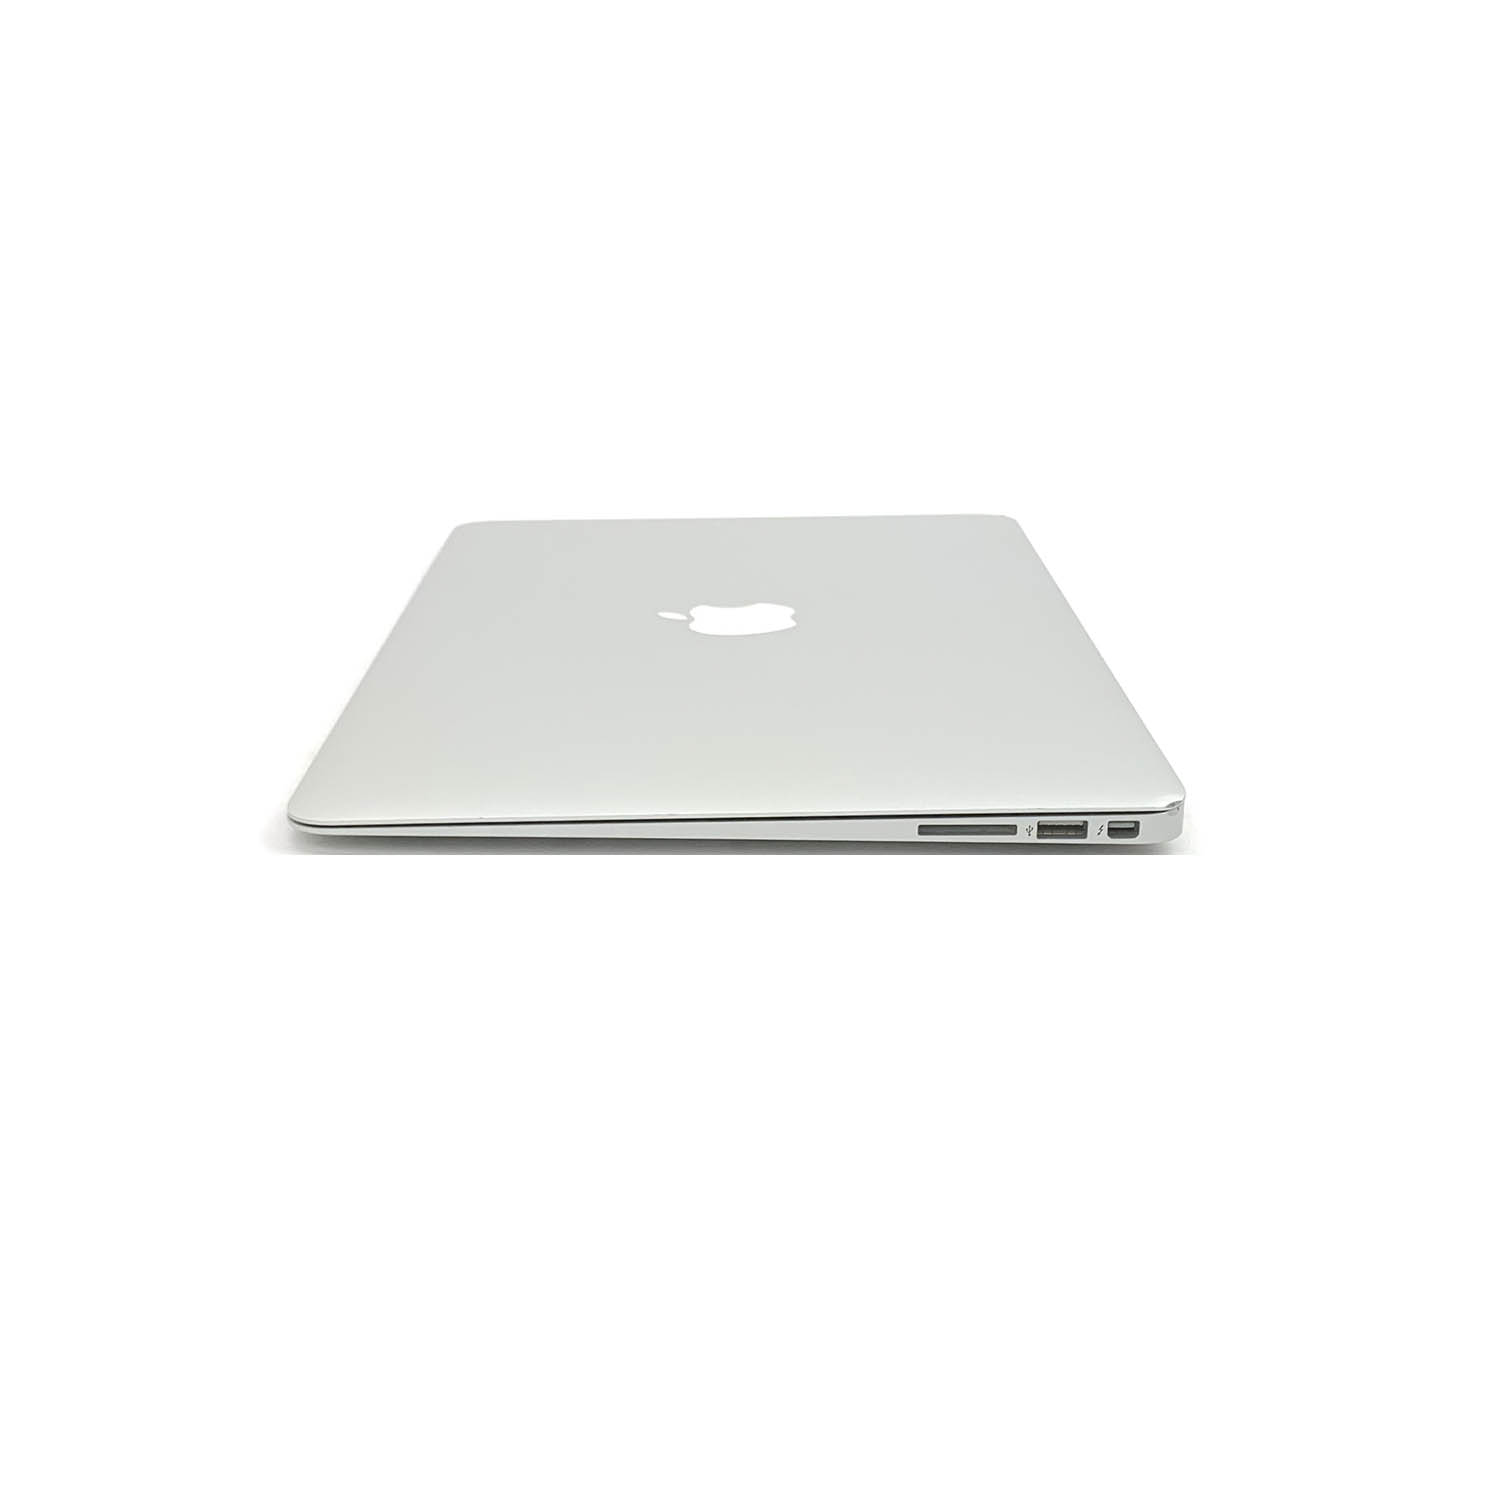 Macbook Air 13 i5 1.4Ghz 4GB 256GB SSD MD760LL/B  Seminovo